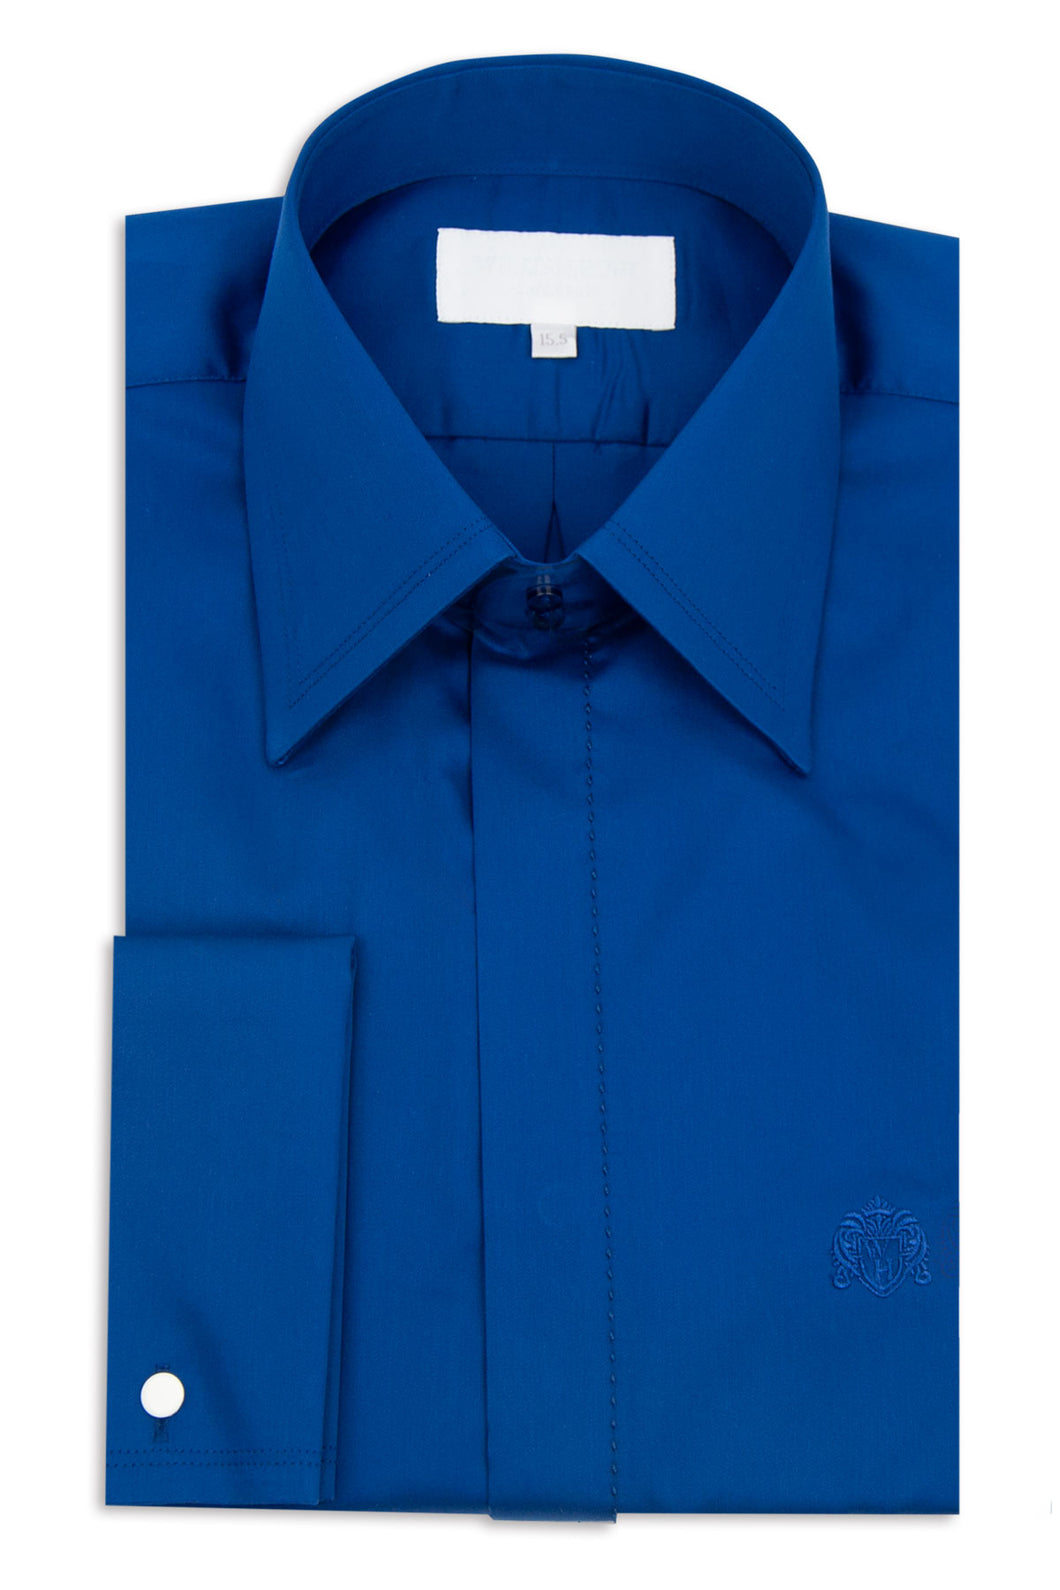 Classic Royal Blue Forward Point Collar Shirt